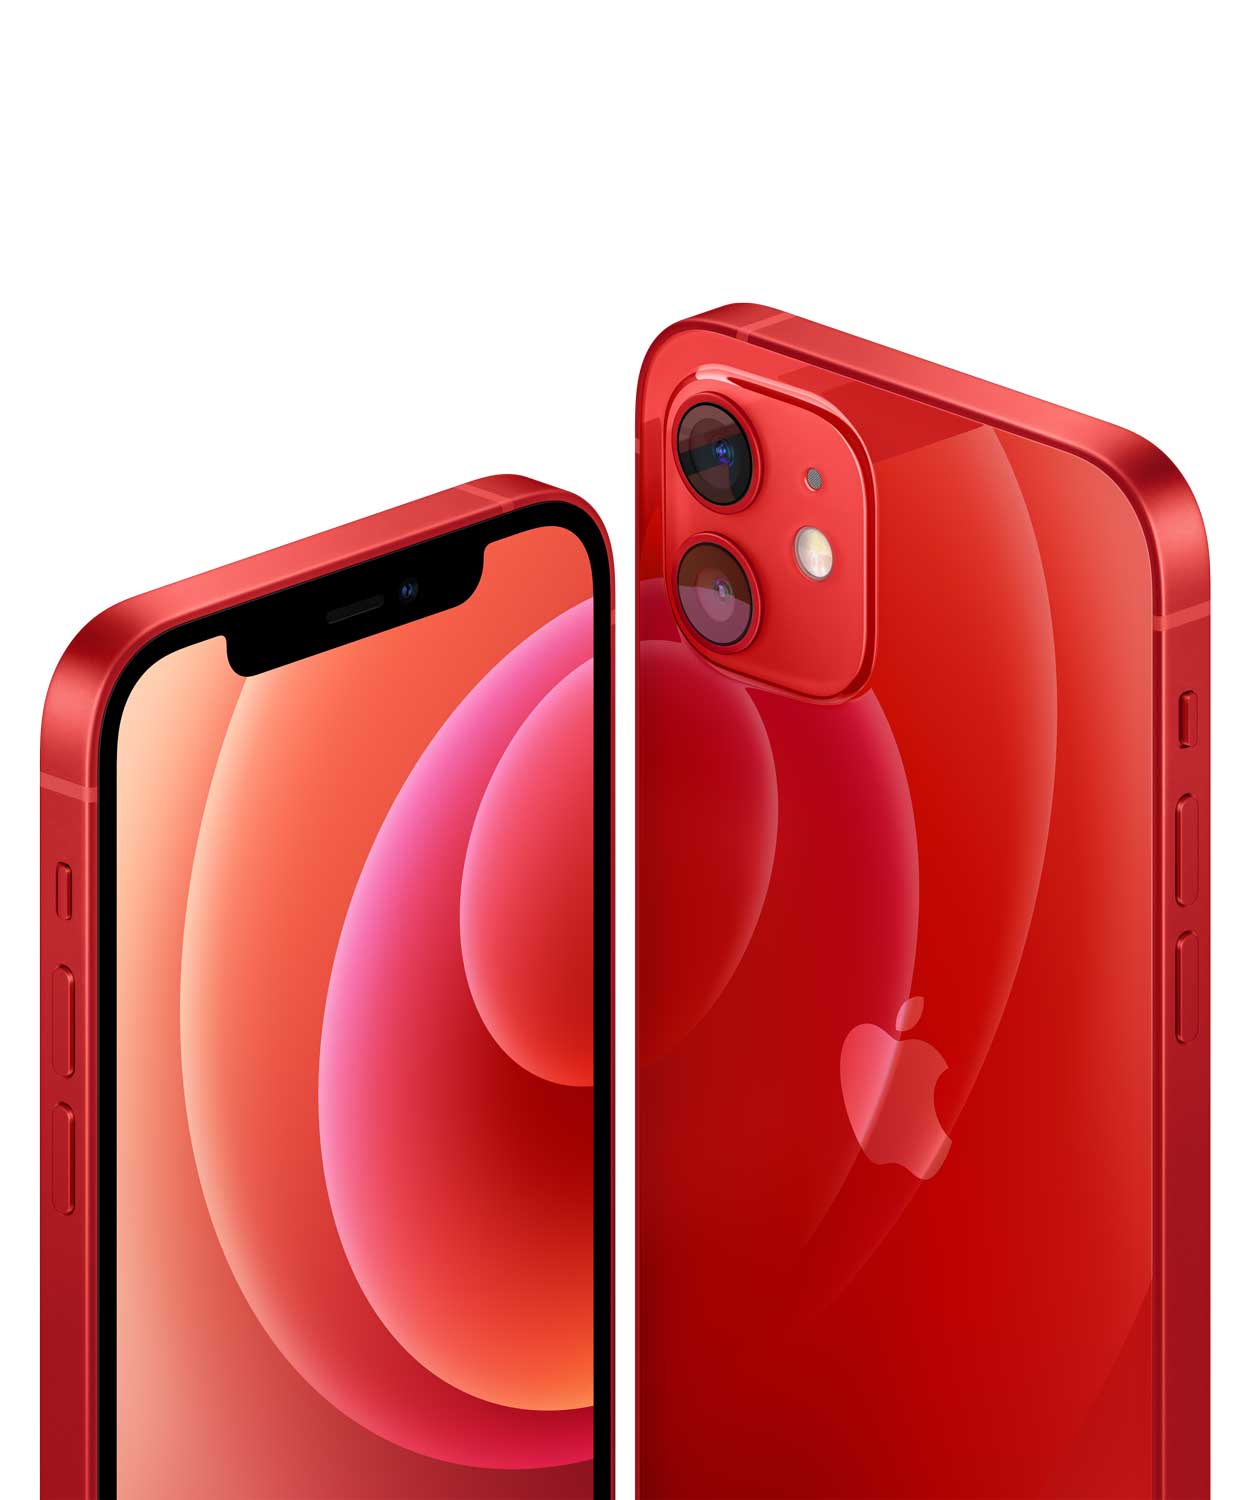 Apple iPhone 12 - (PRODUCT) RED - Smartphone - Dual-SIM - 5G NR - 128GB - CDMA / GSM - 6.1